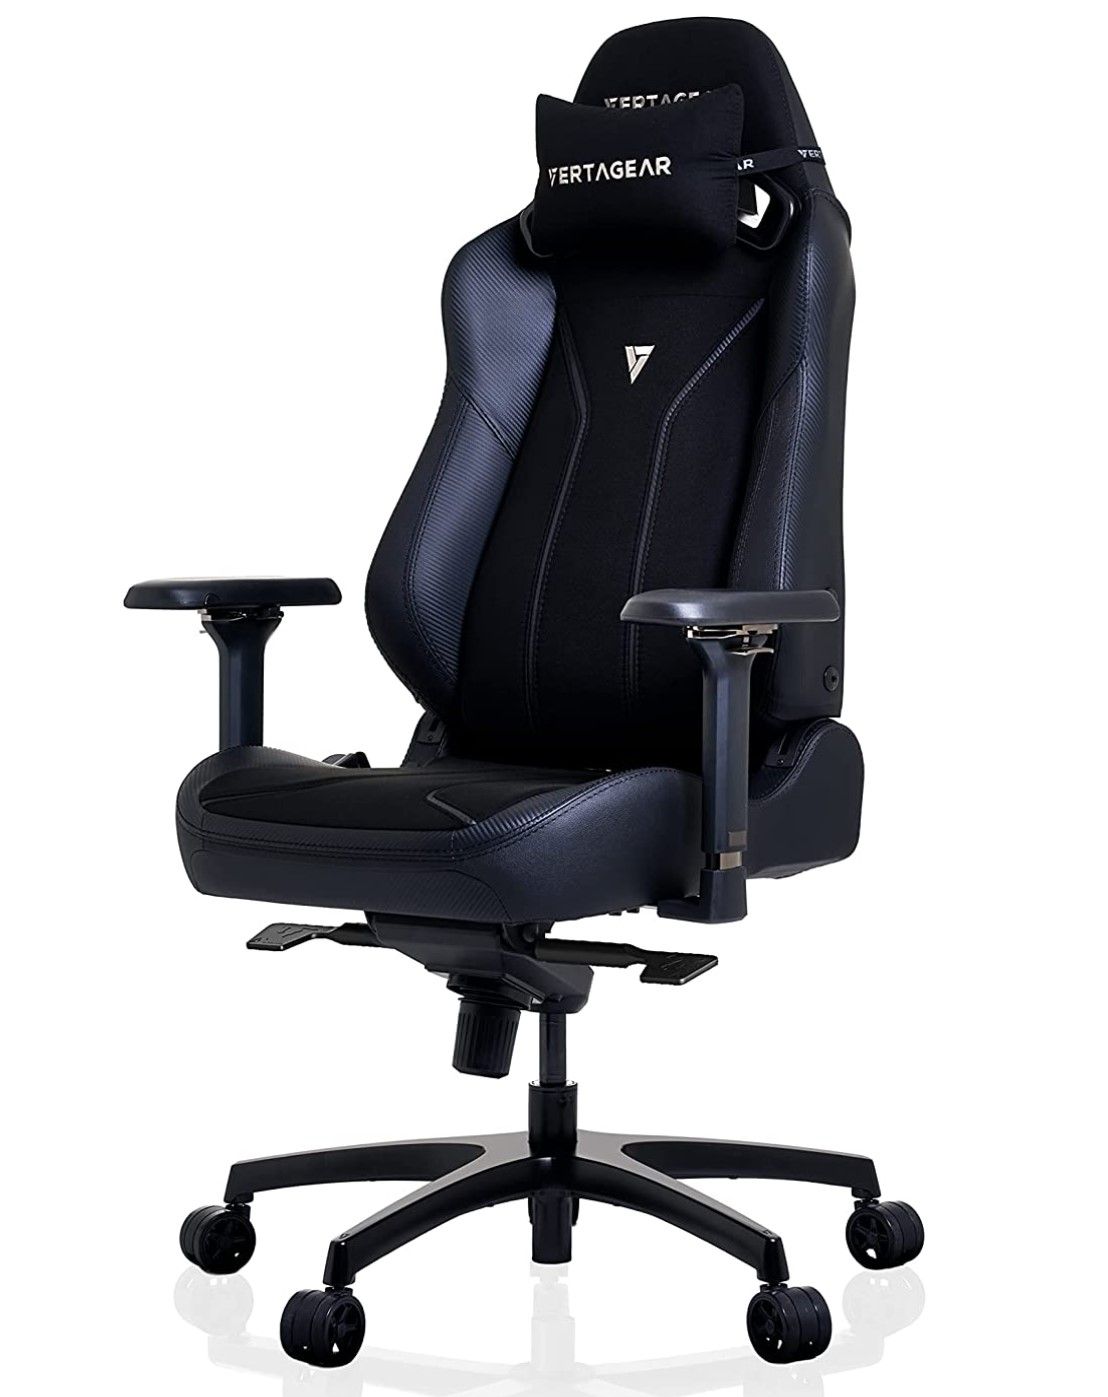 VERTAGEAR SL5800 Large Ergonomic Gaming Chair